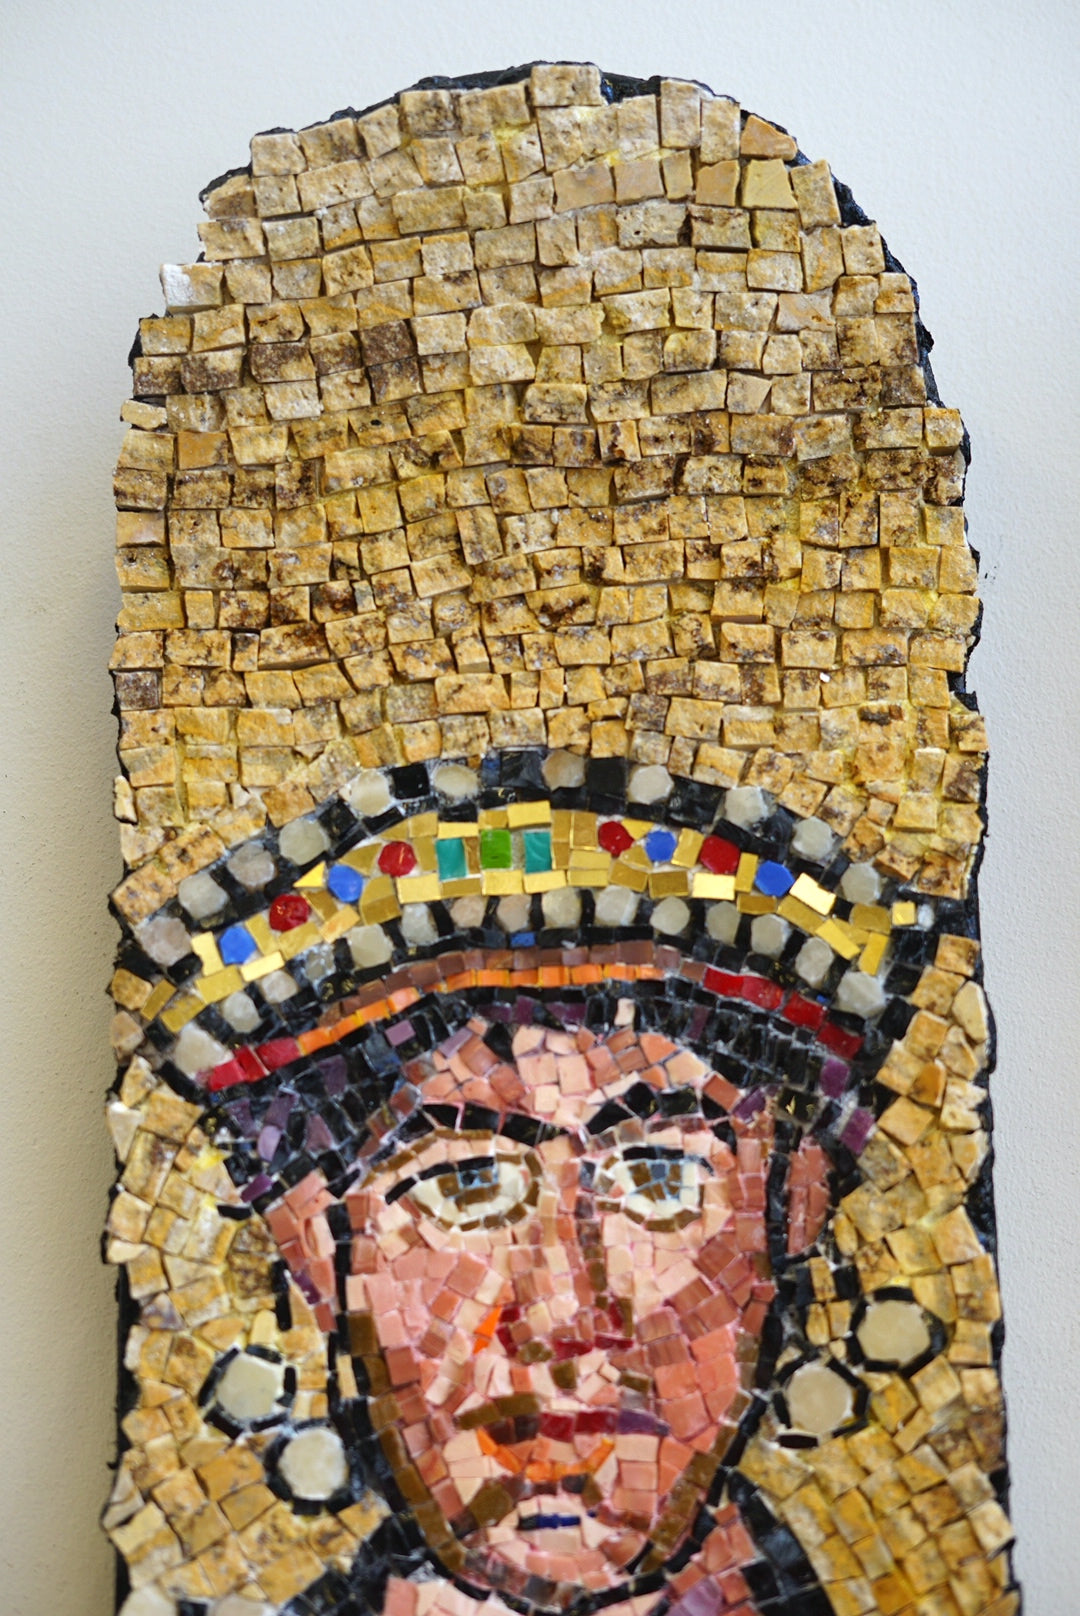 Skateboard Mosaic of Emperor Justinian.